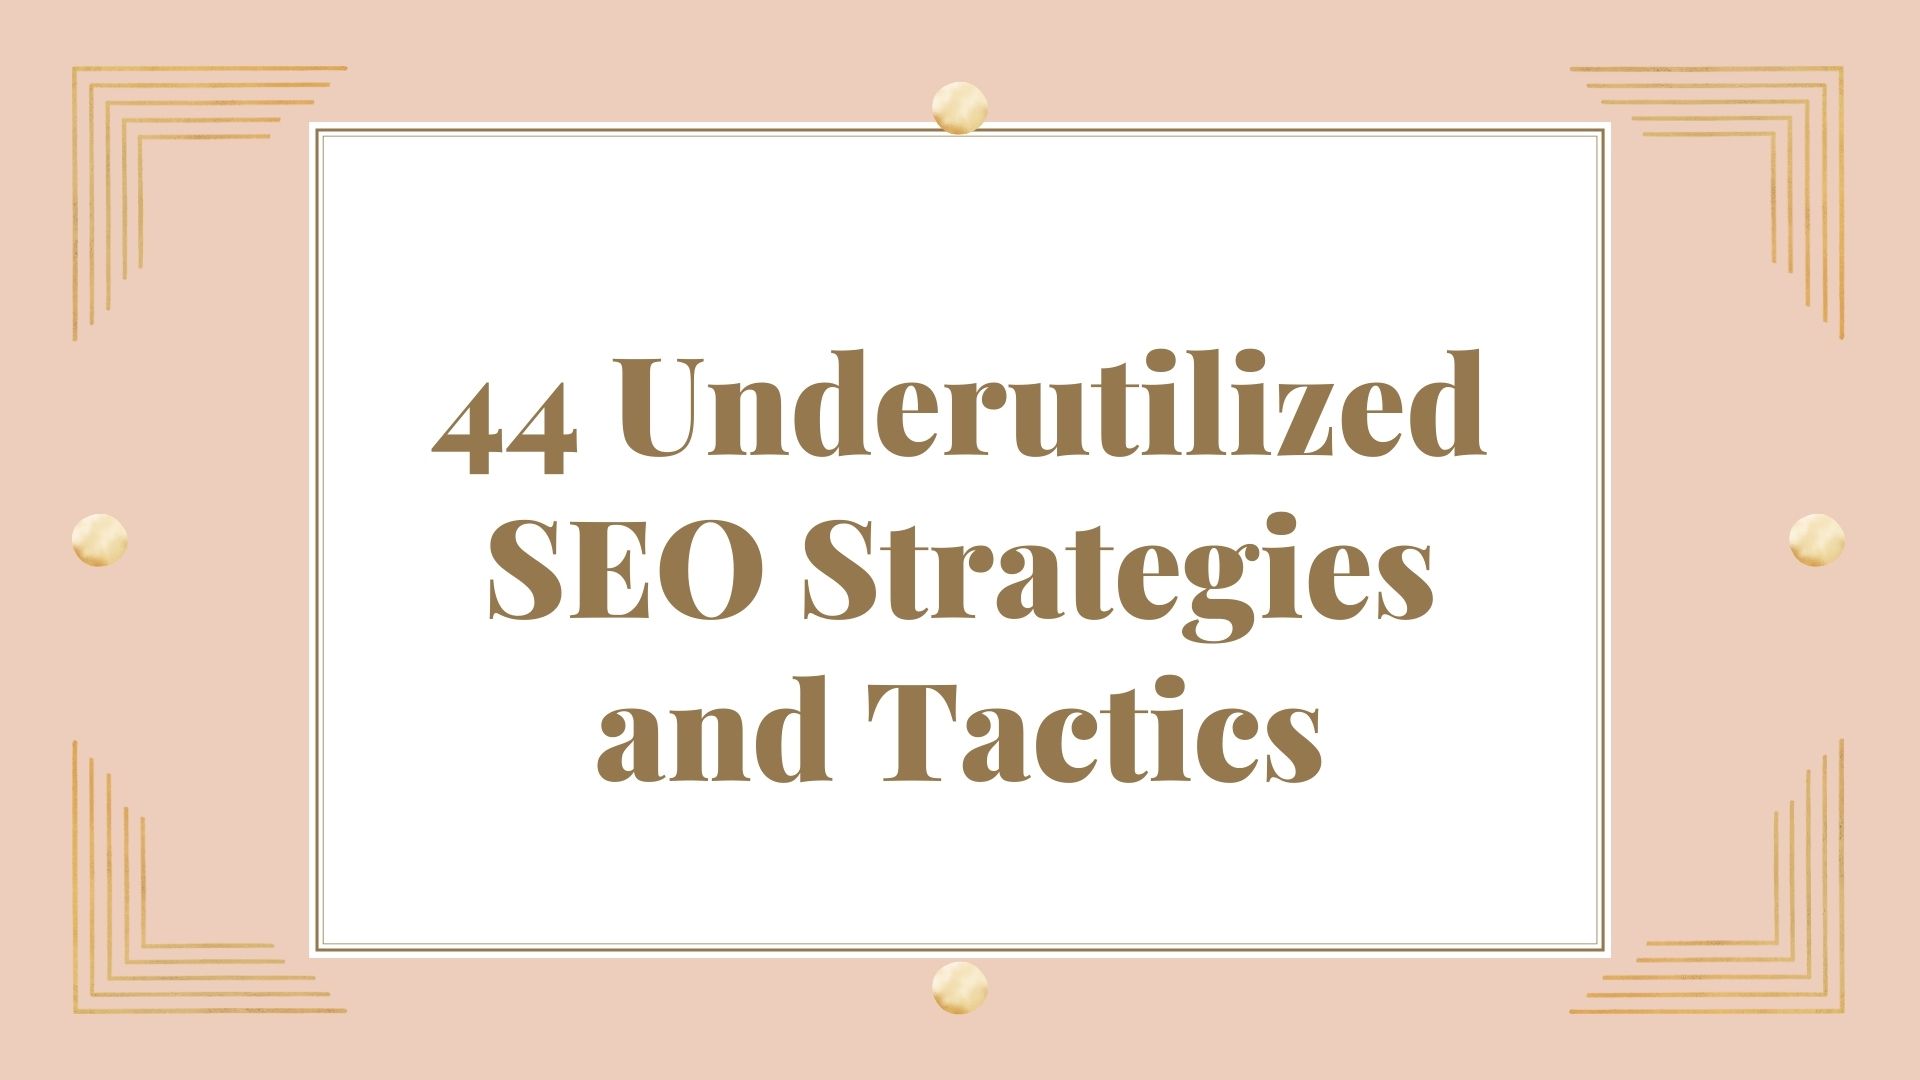 44 Underutilized SEO Strategies and Tactics